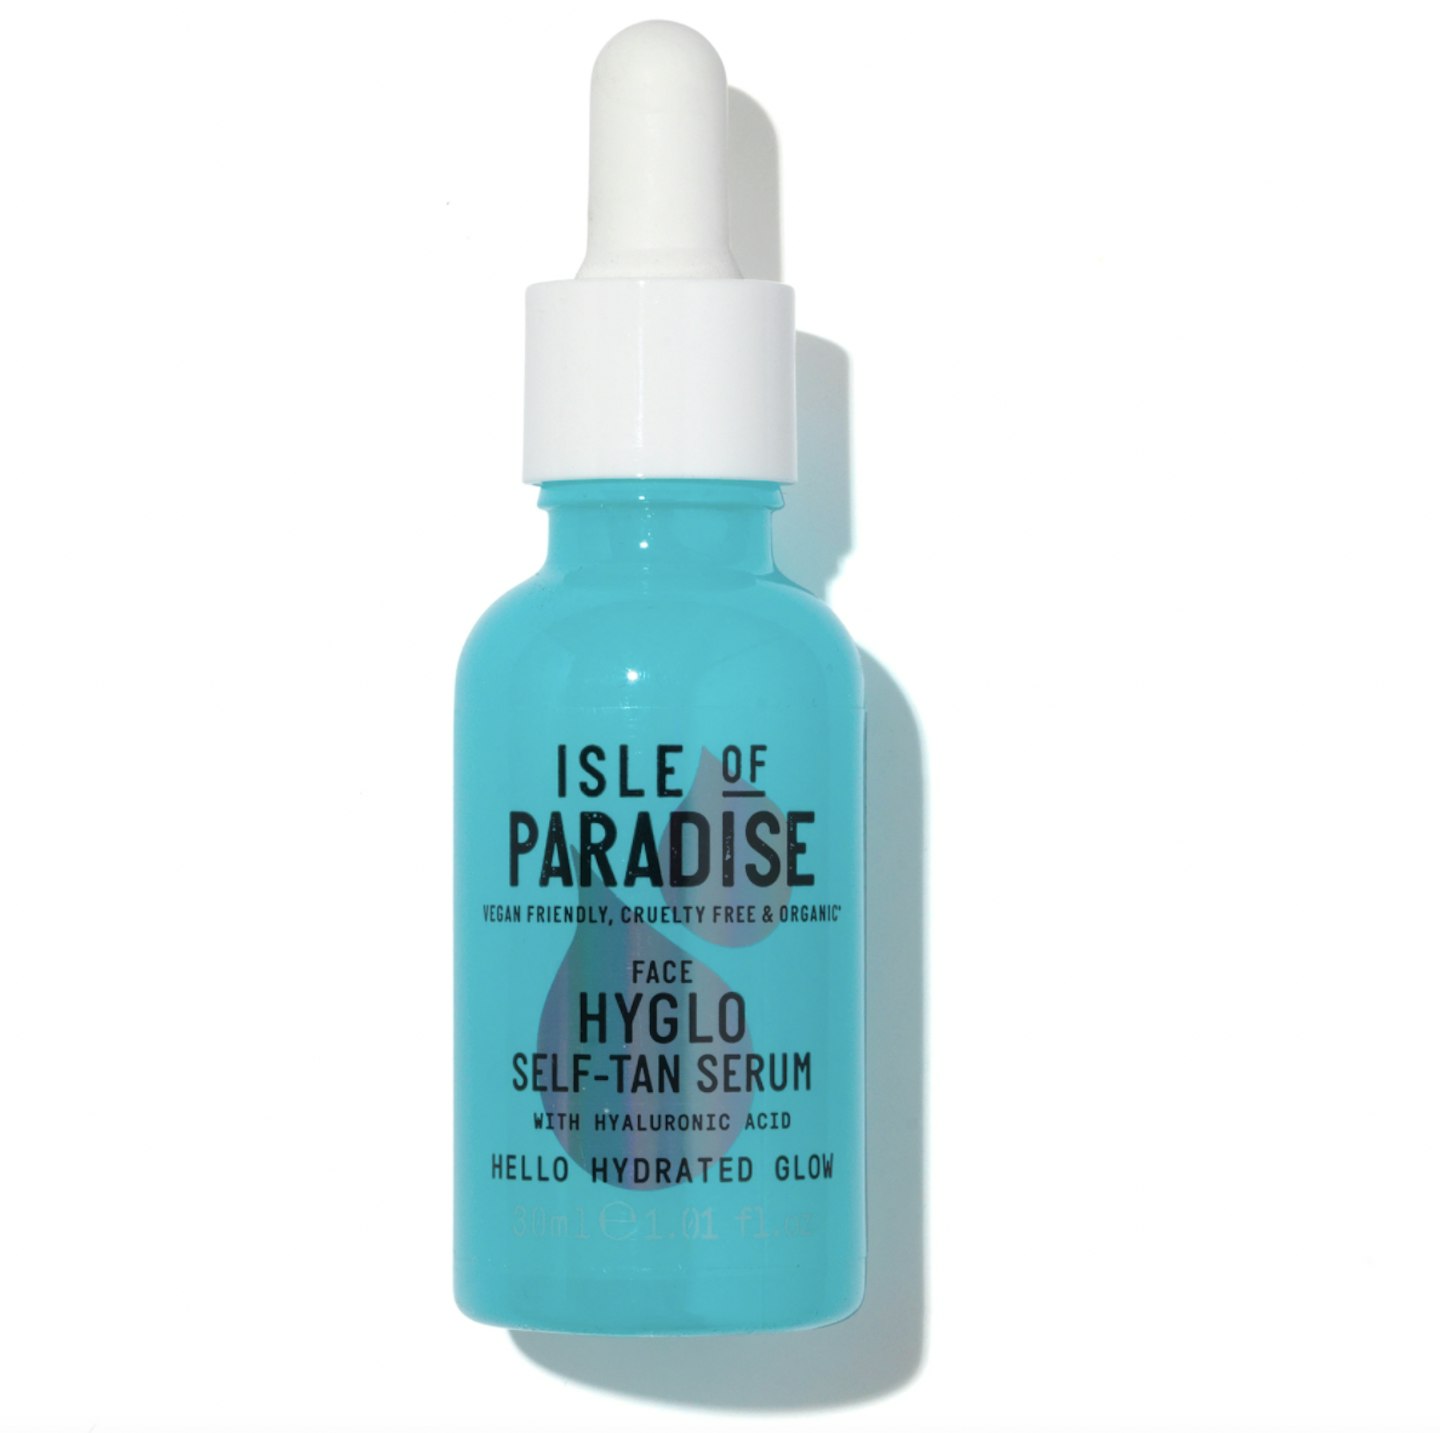 Isle of Paradise Hyglo Self-Tan Face Serum